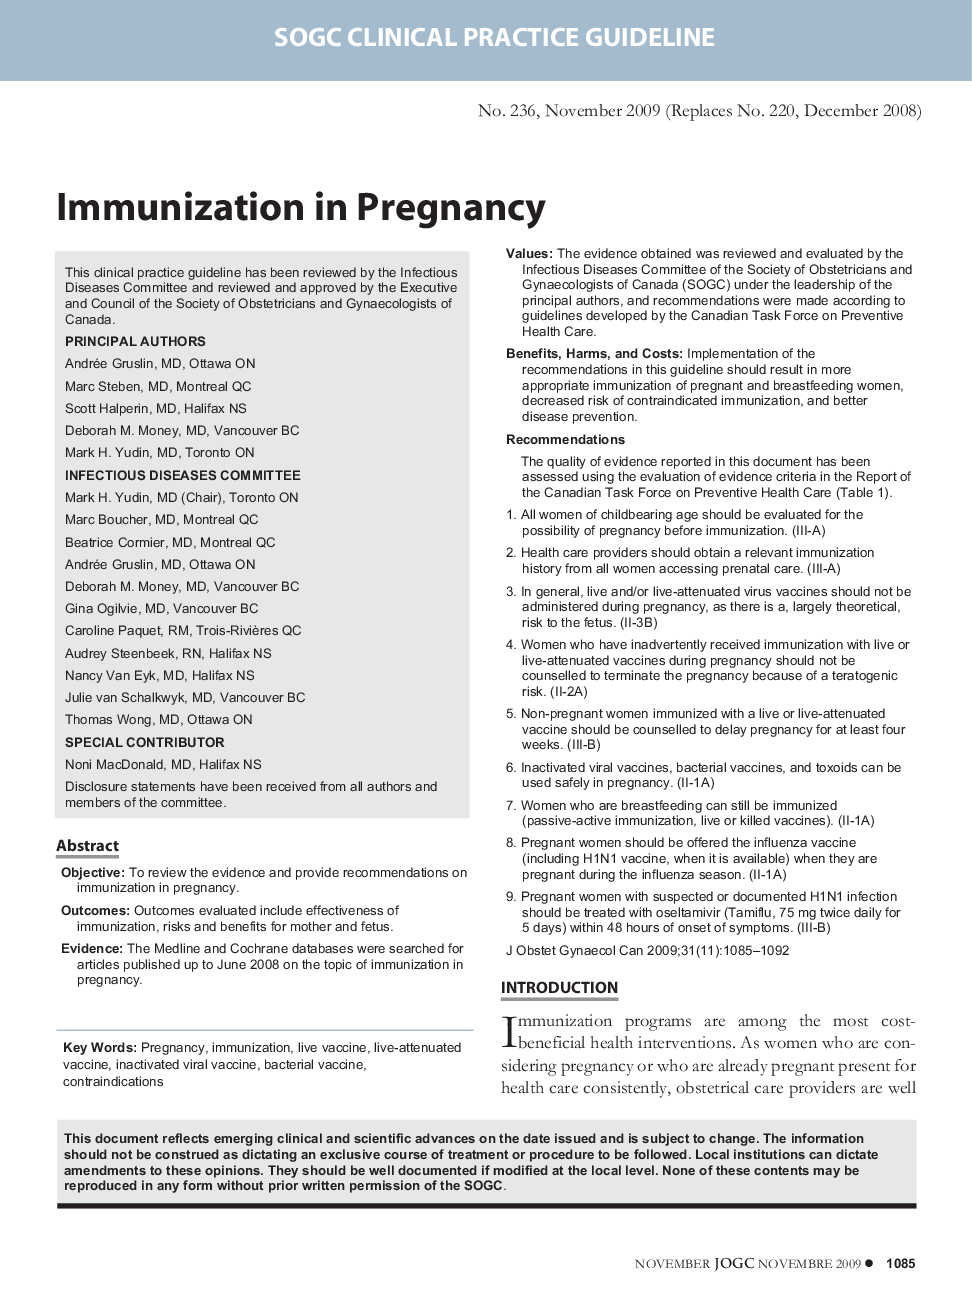 Immunization in Pregnancy